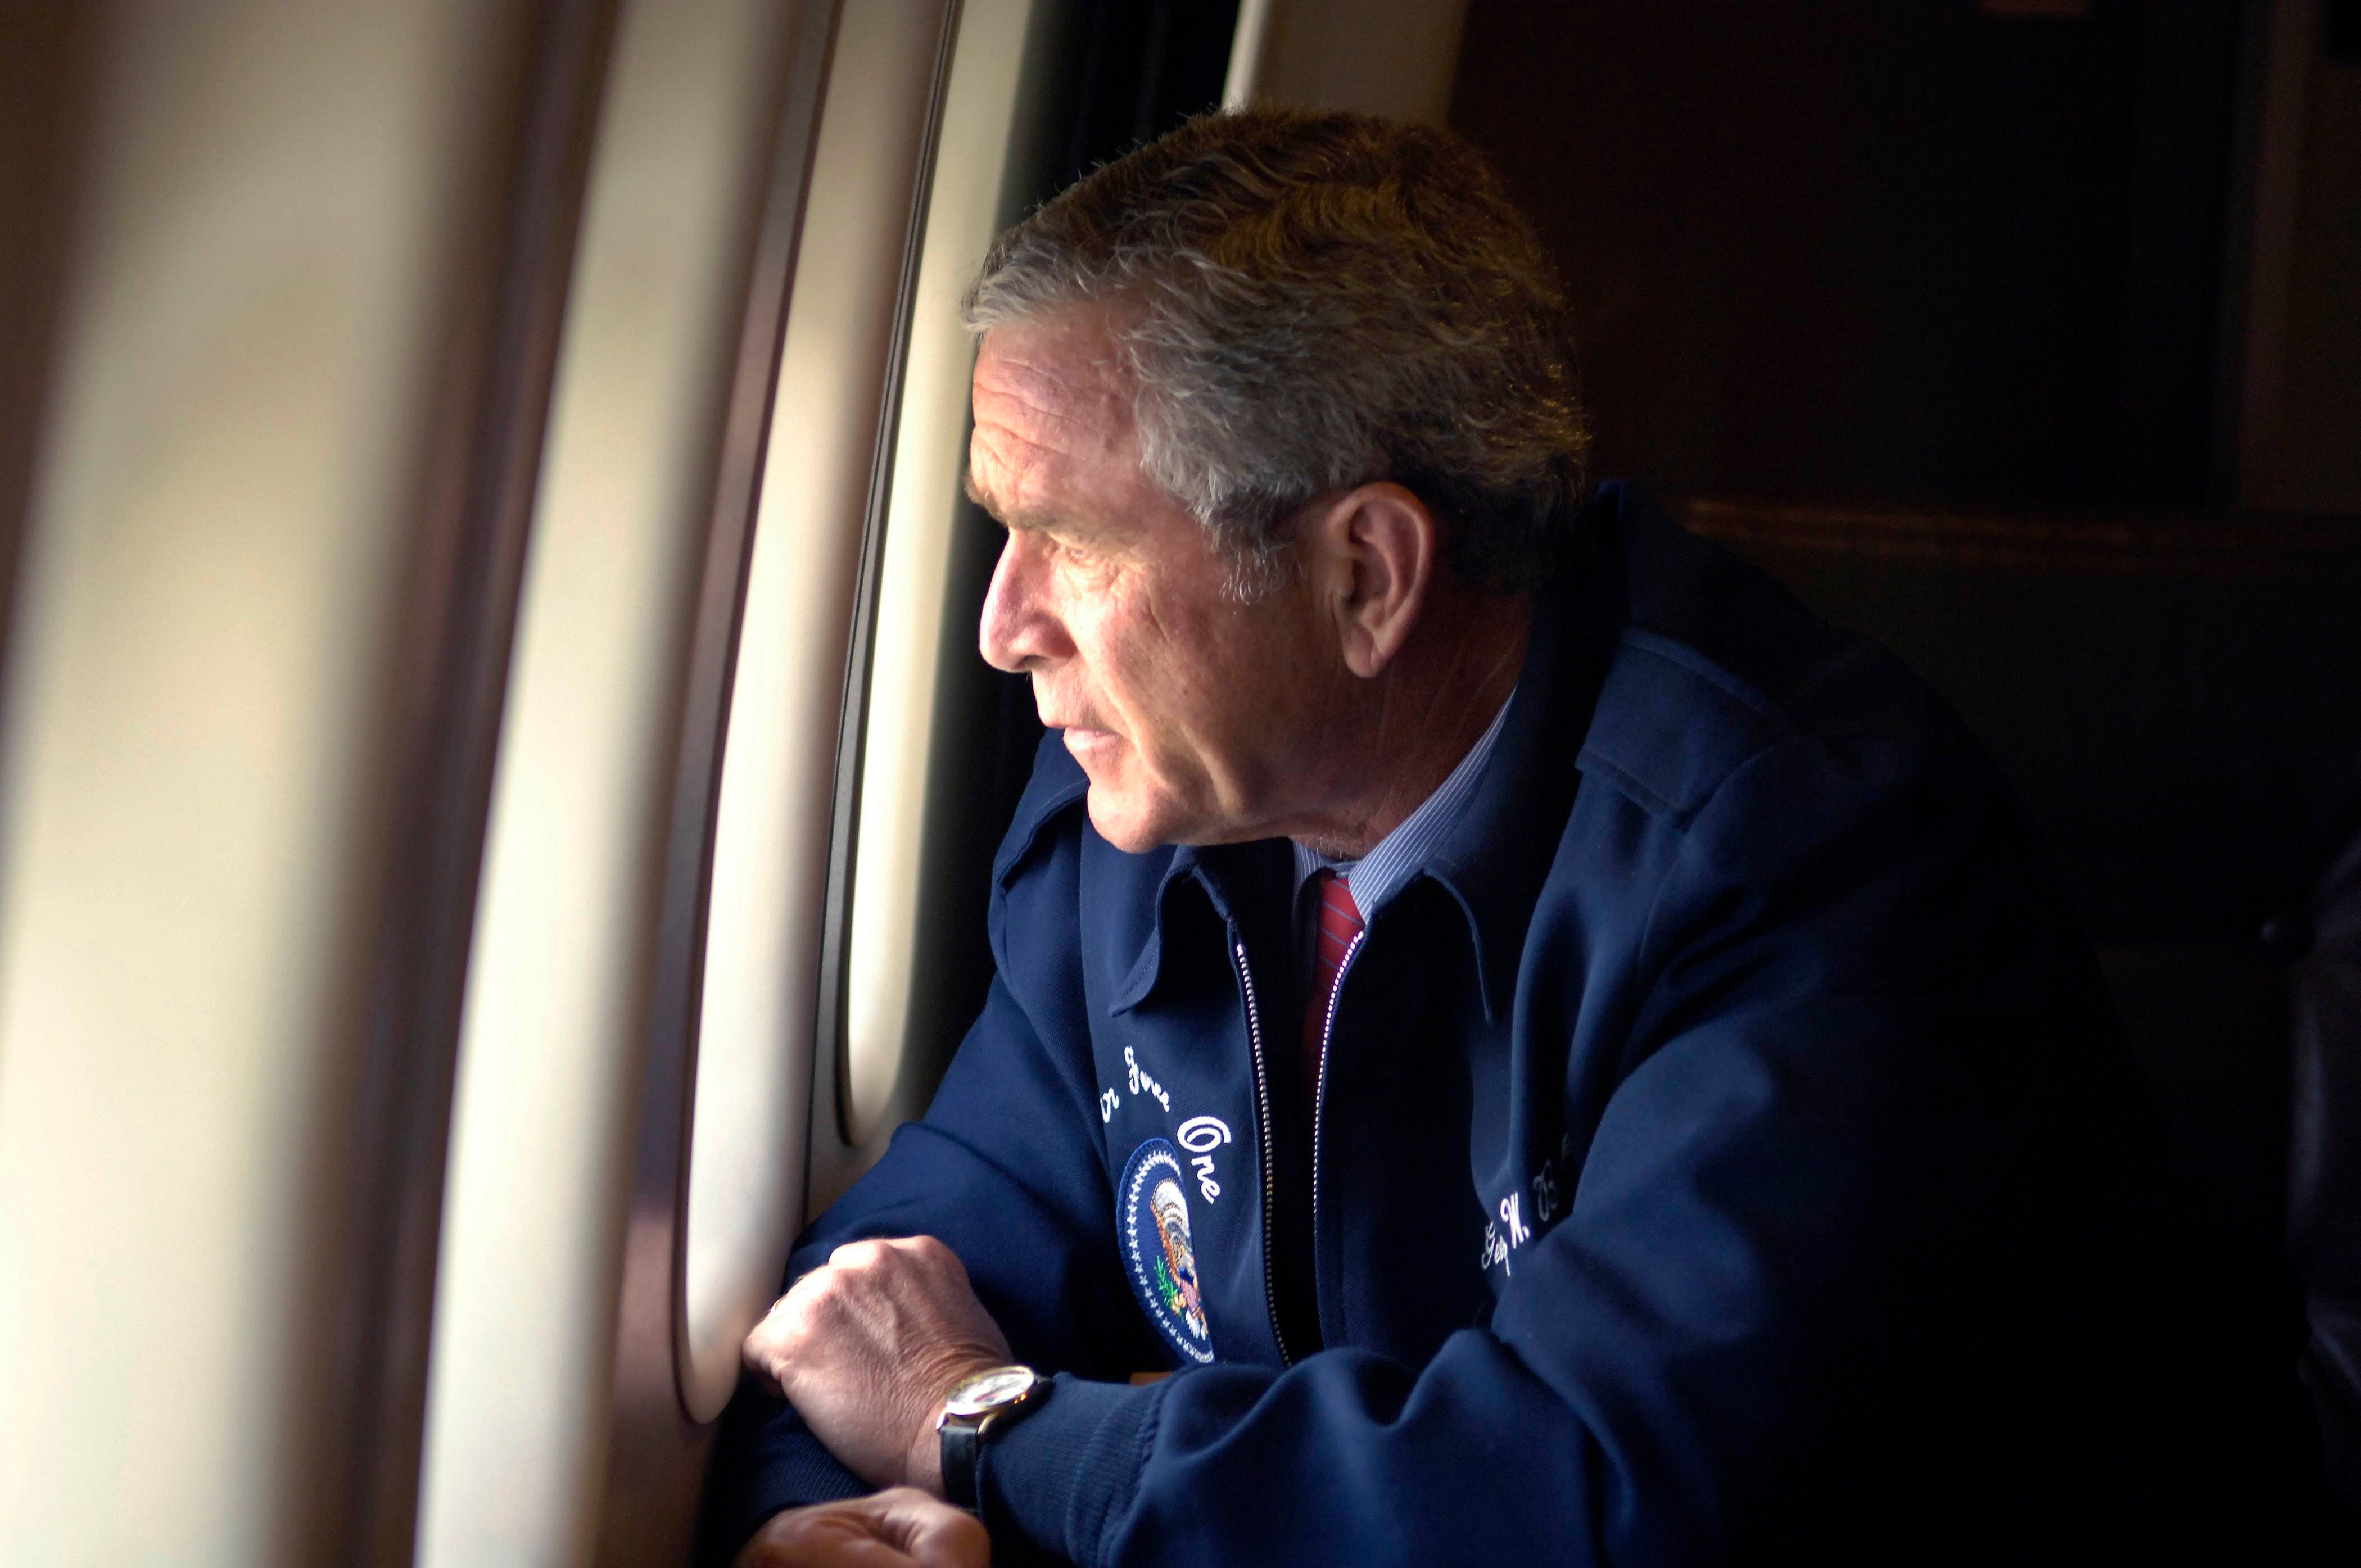 George Bush peers out the window of Air Force One as he surveys Hurricane Katrina damage along the Gulf Coast states of Louisiana, Mississippi and Alabama